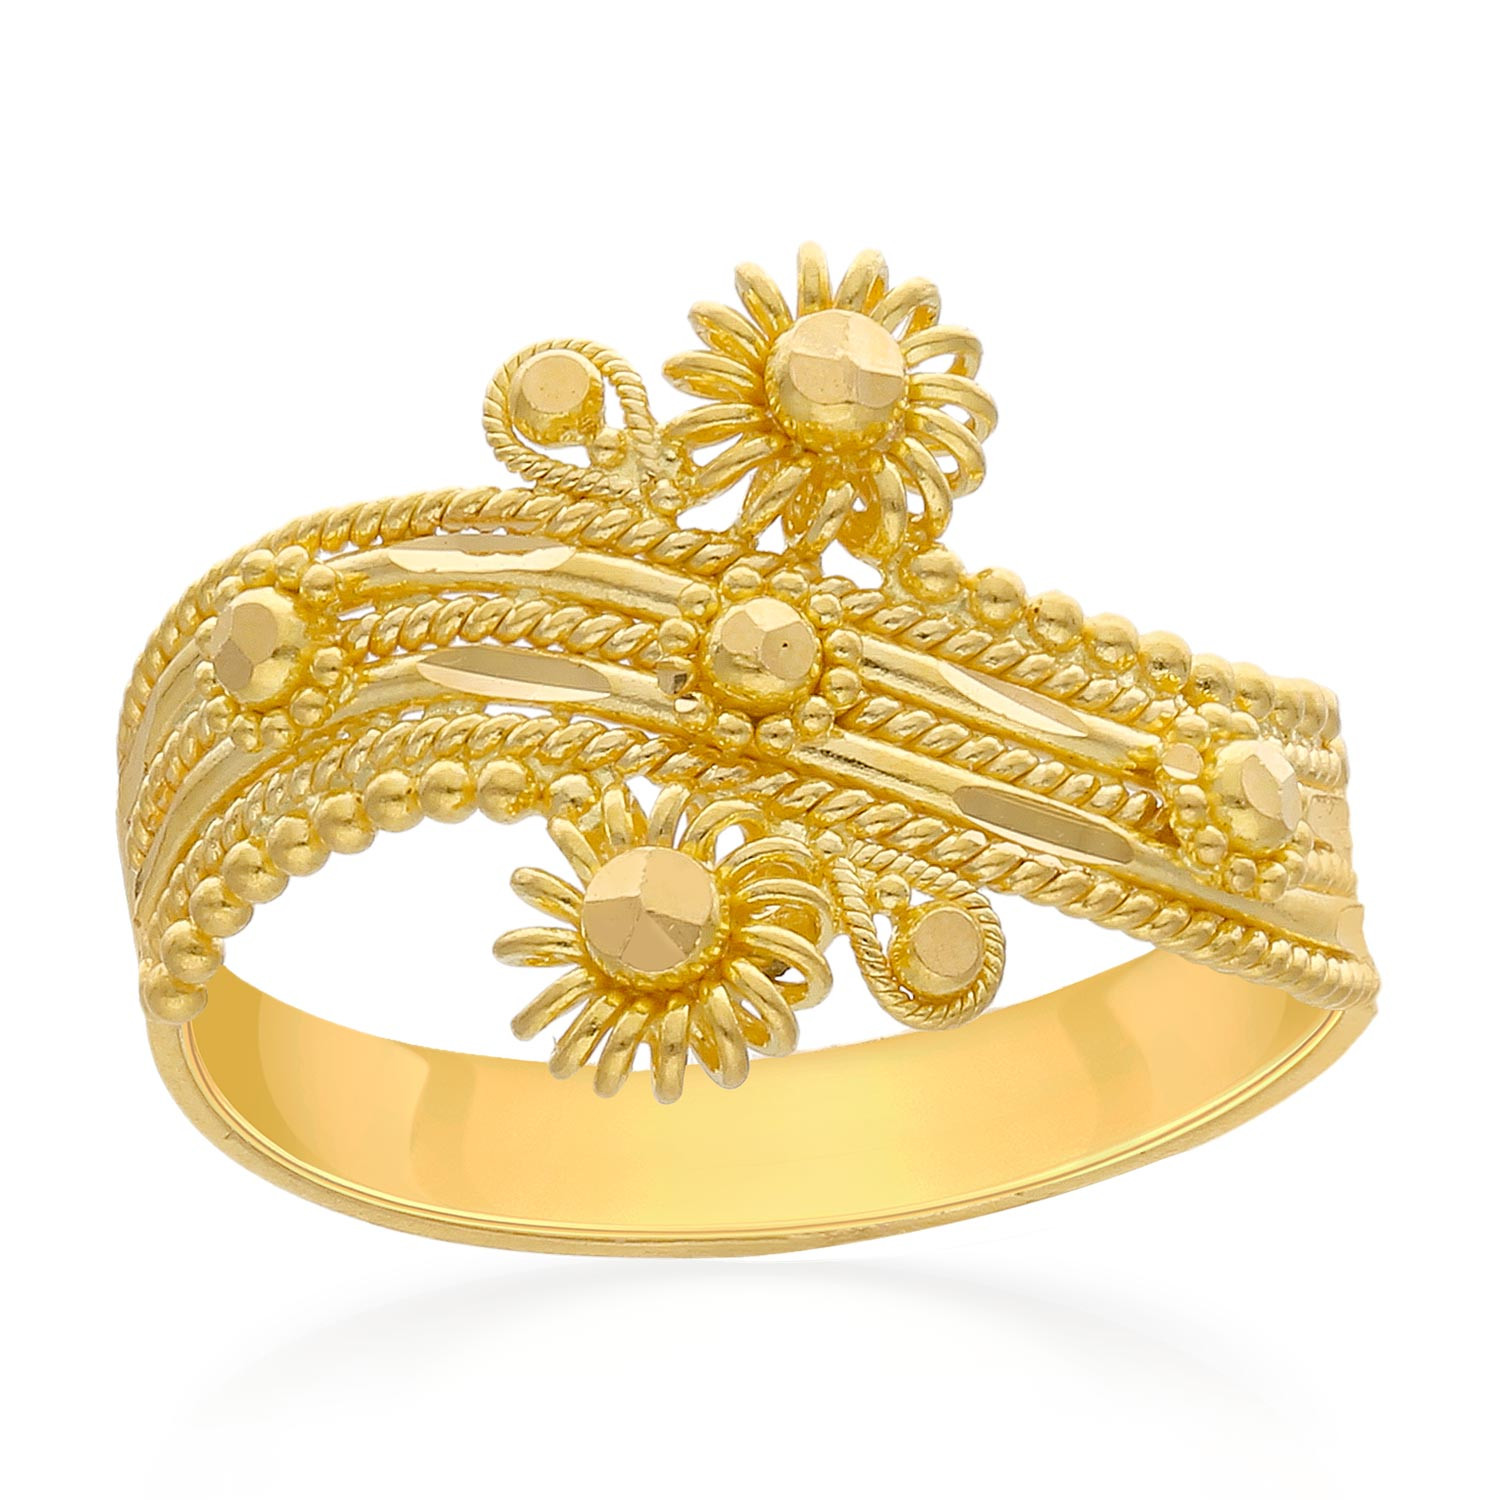 Malabar Gold Ring Designs with Price | Ladies gold rings, Gold ring  designs, Jewelry